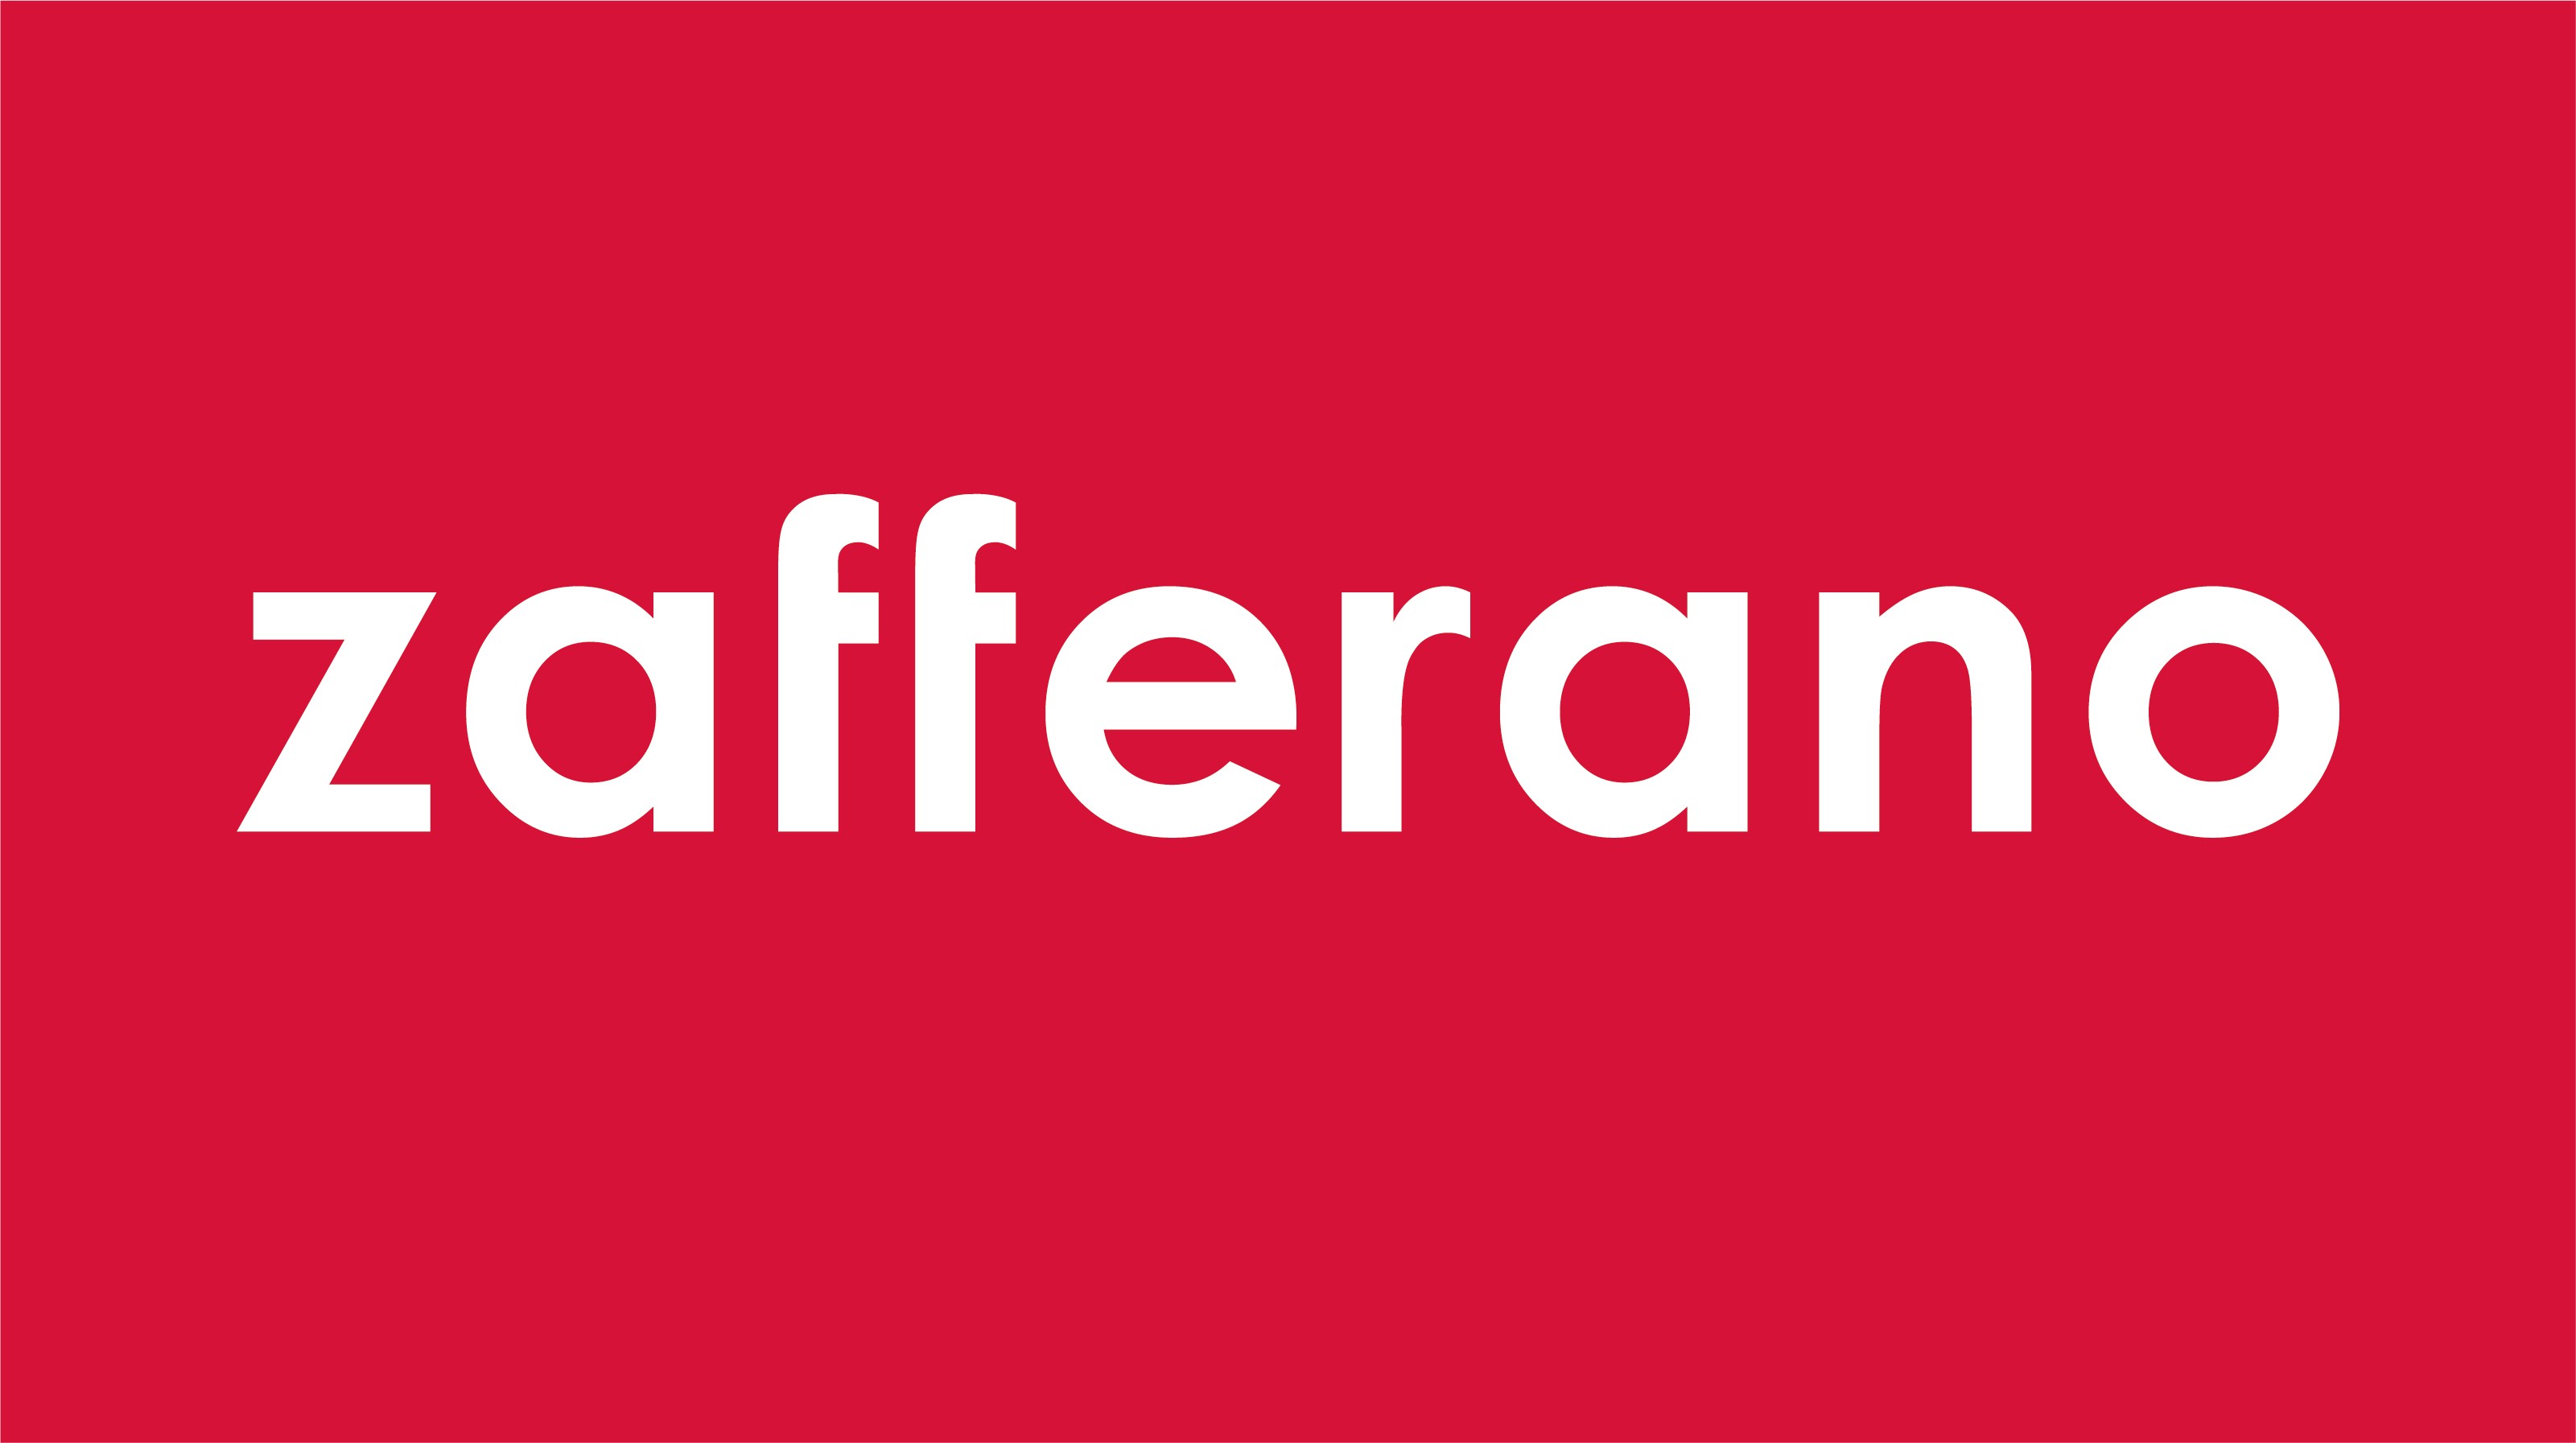 Zafferano: new Corporate Identity